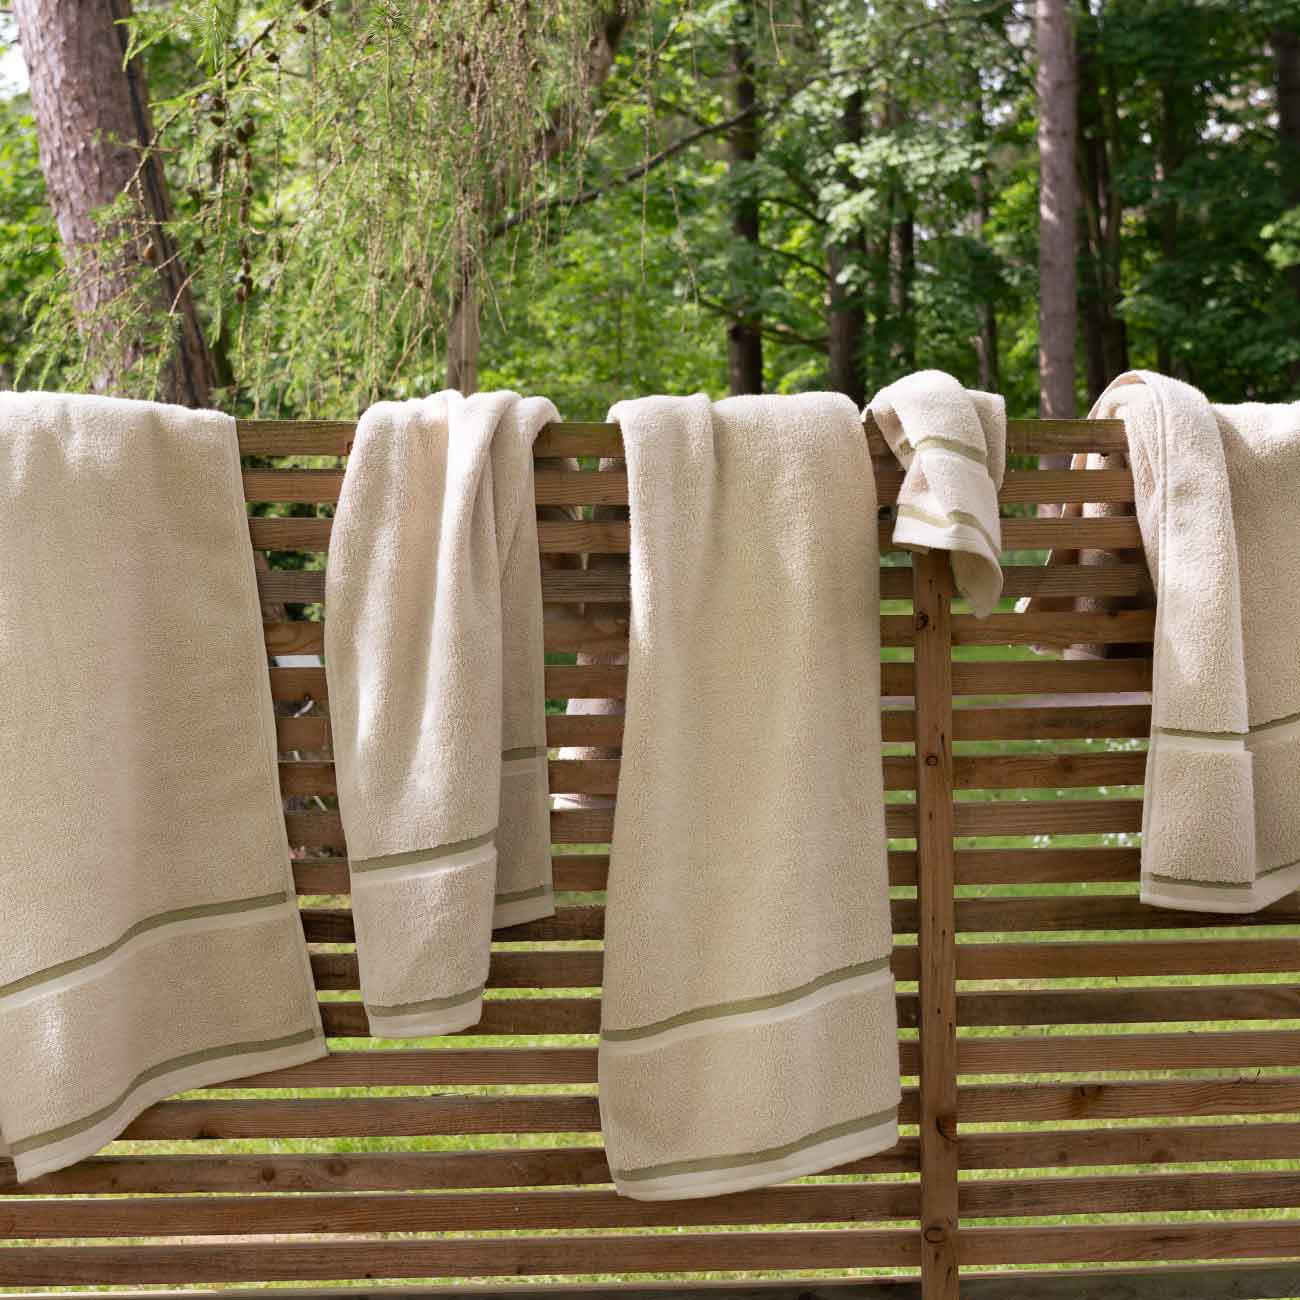 Birch Cotton Towels